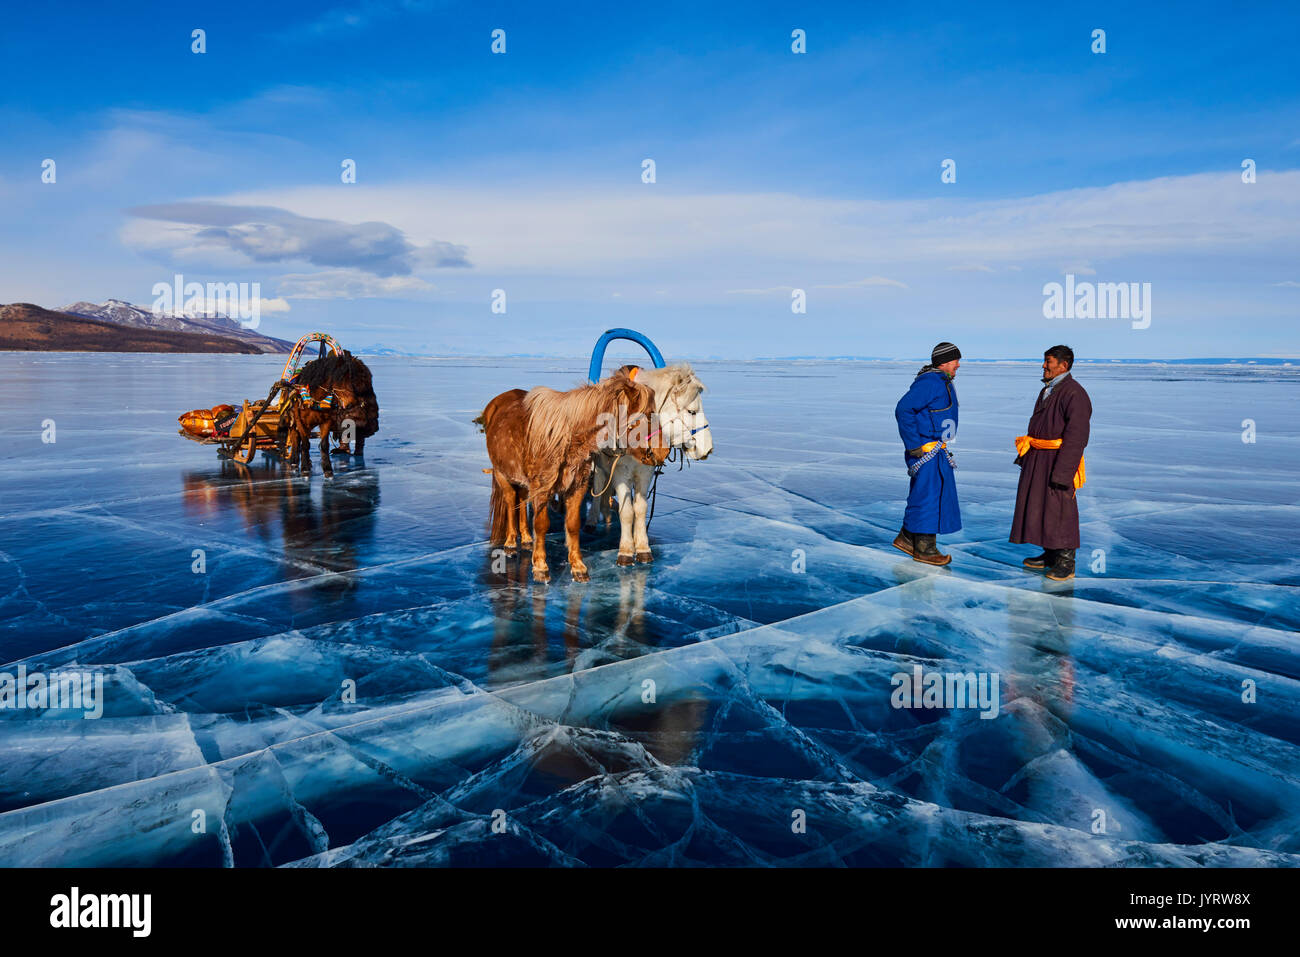 Mongolia, Khovsgol provincia, trineo de caballos en el lago congelado de Khovsgol en invierno Foto de stock